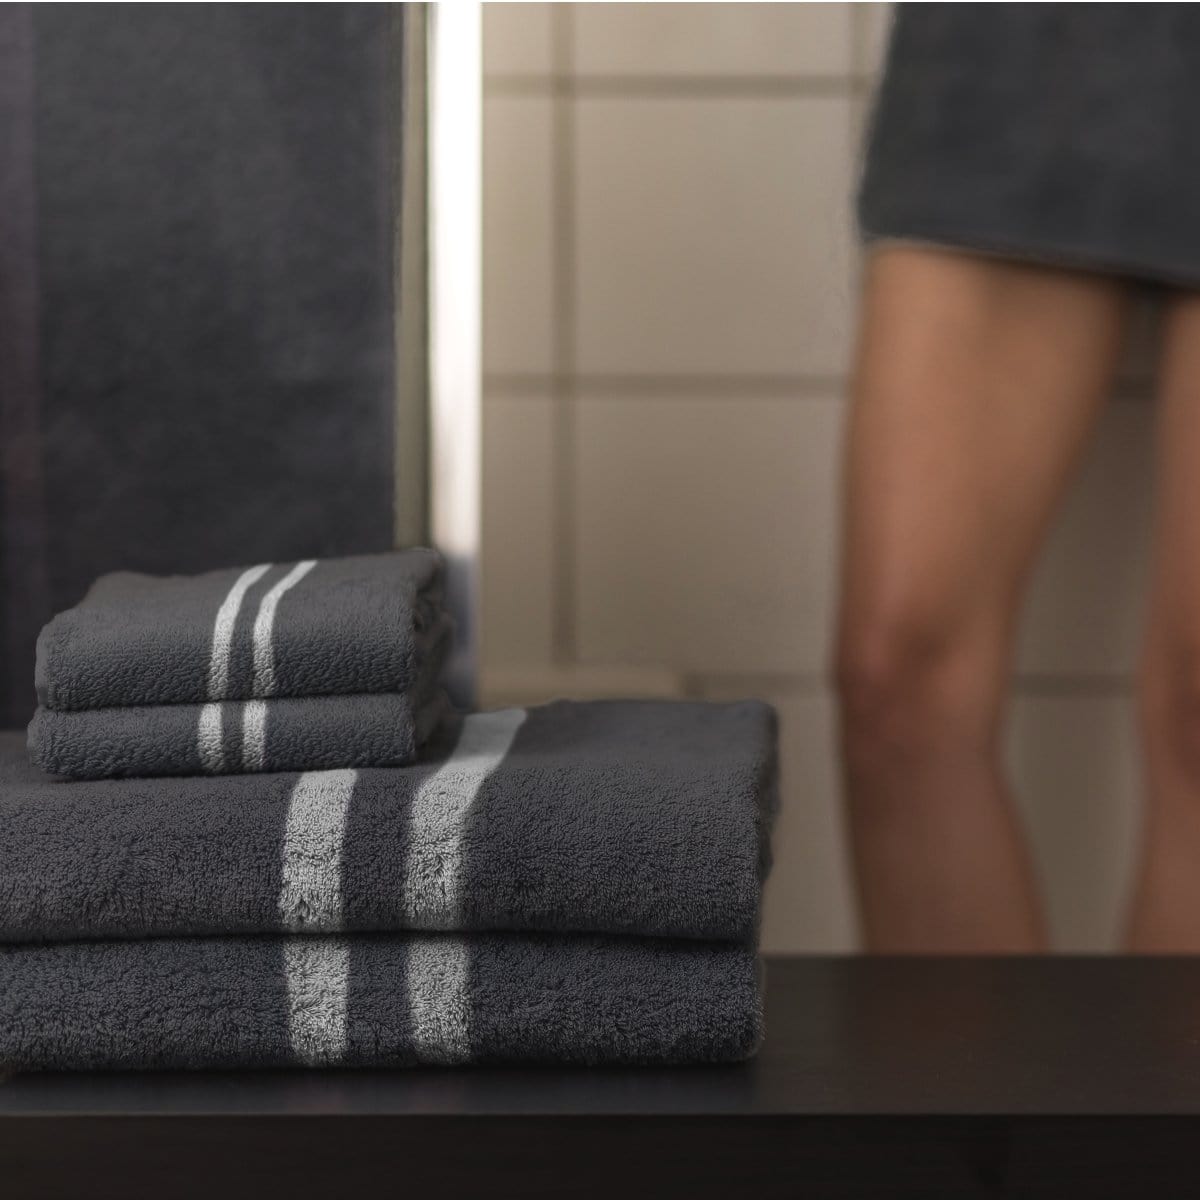 6x Smart Towel Set